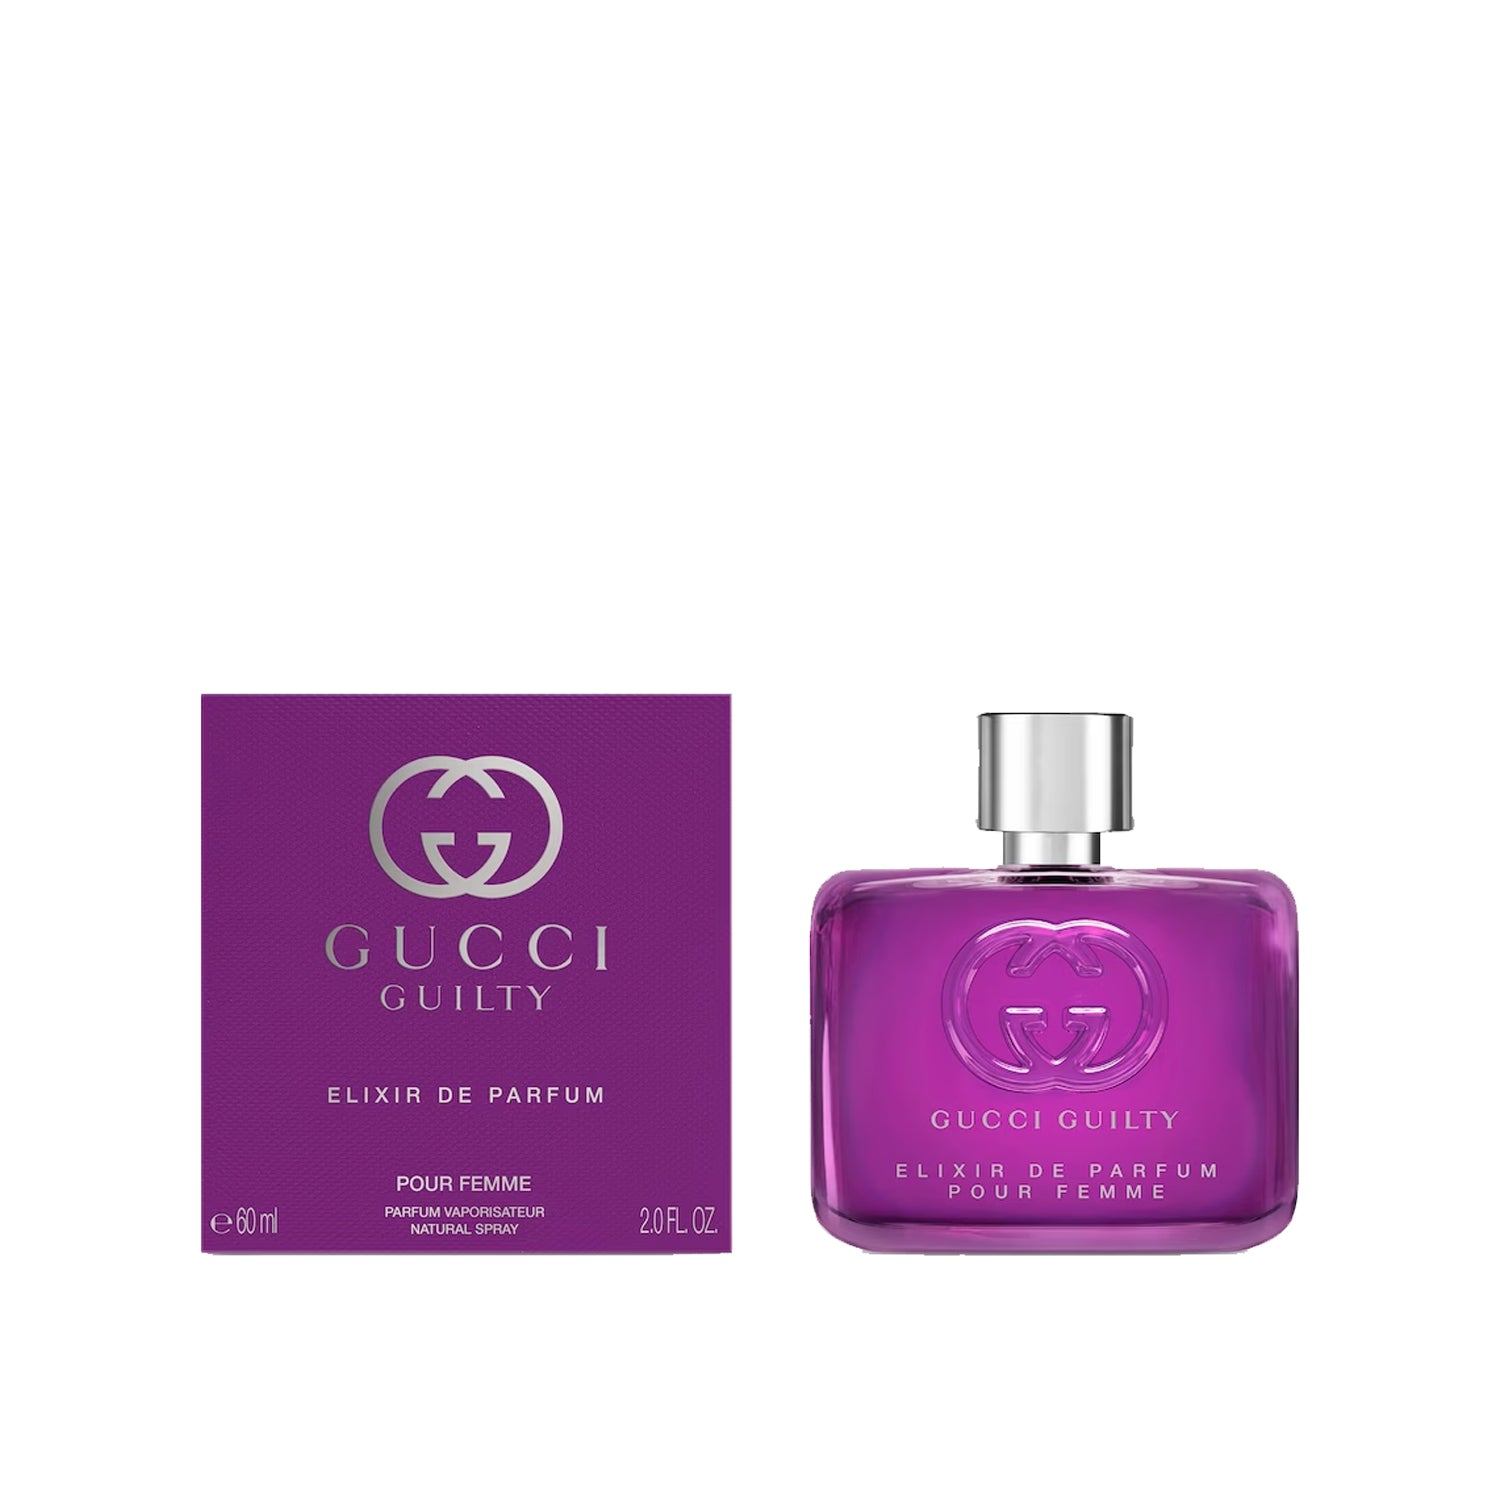 Guilty Elixir De Parfum Spray for Women by Gucci, Product image 1